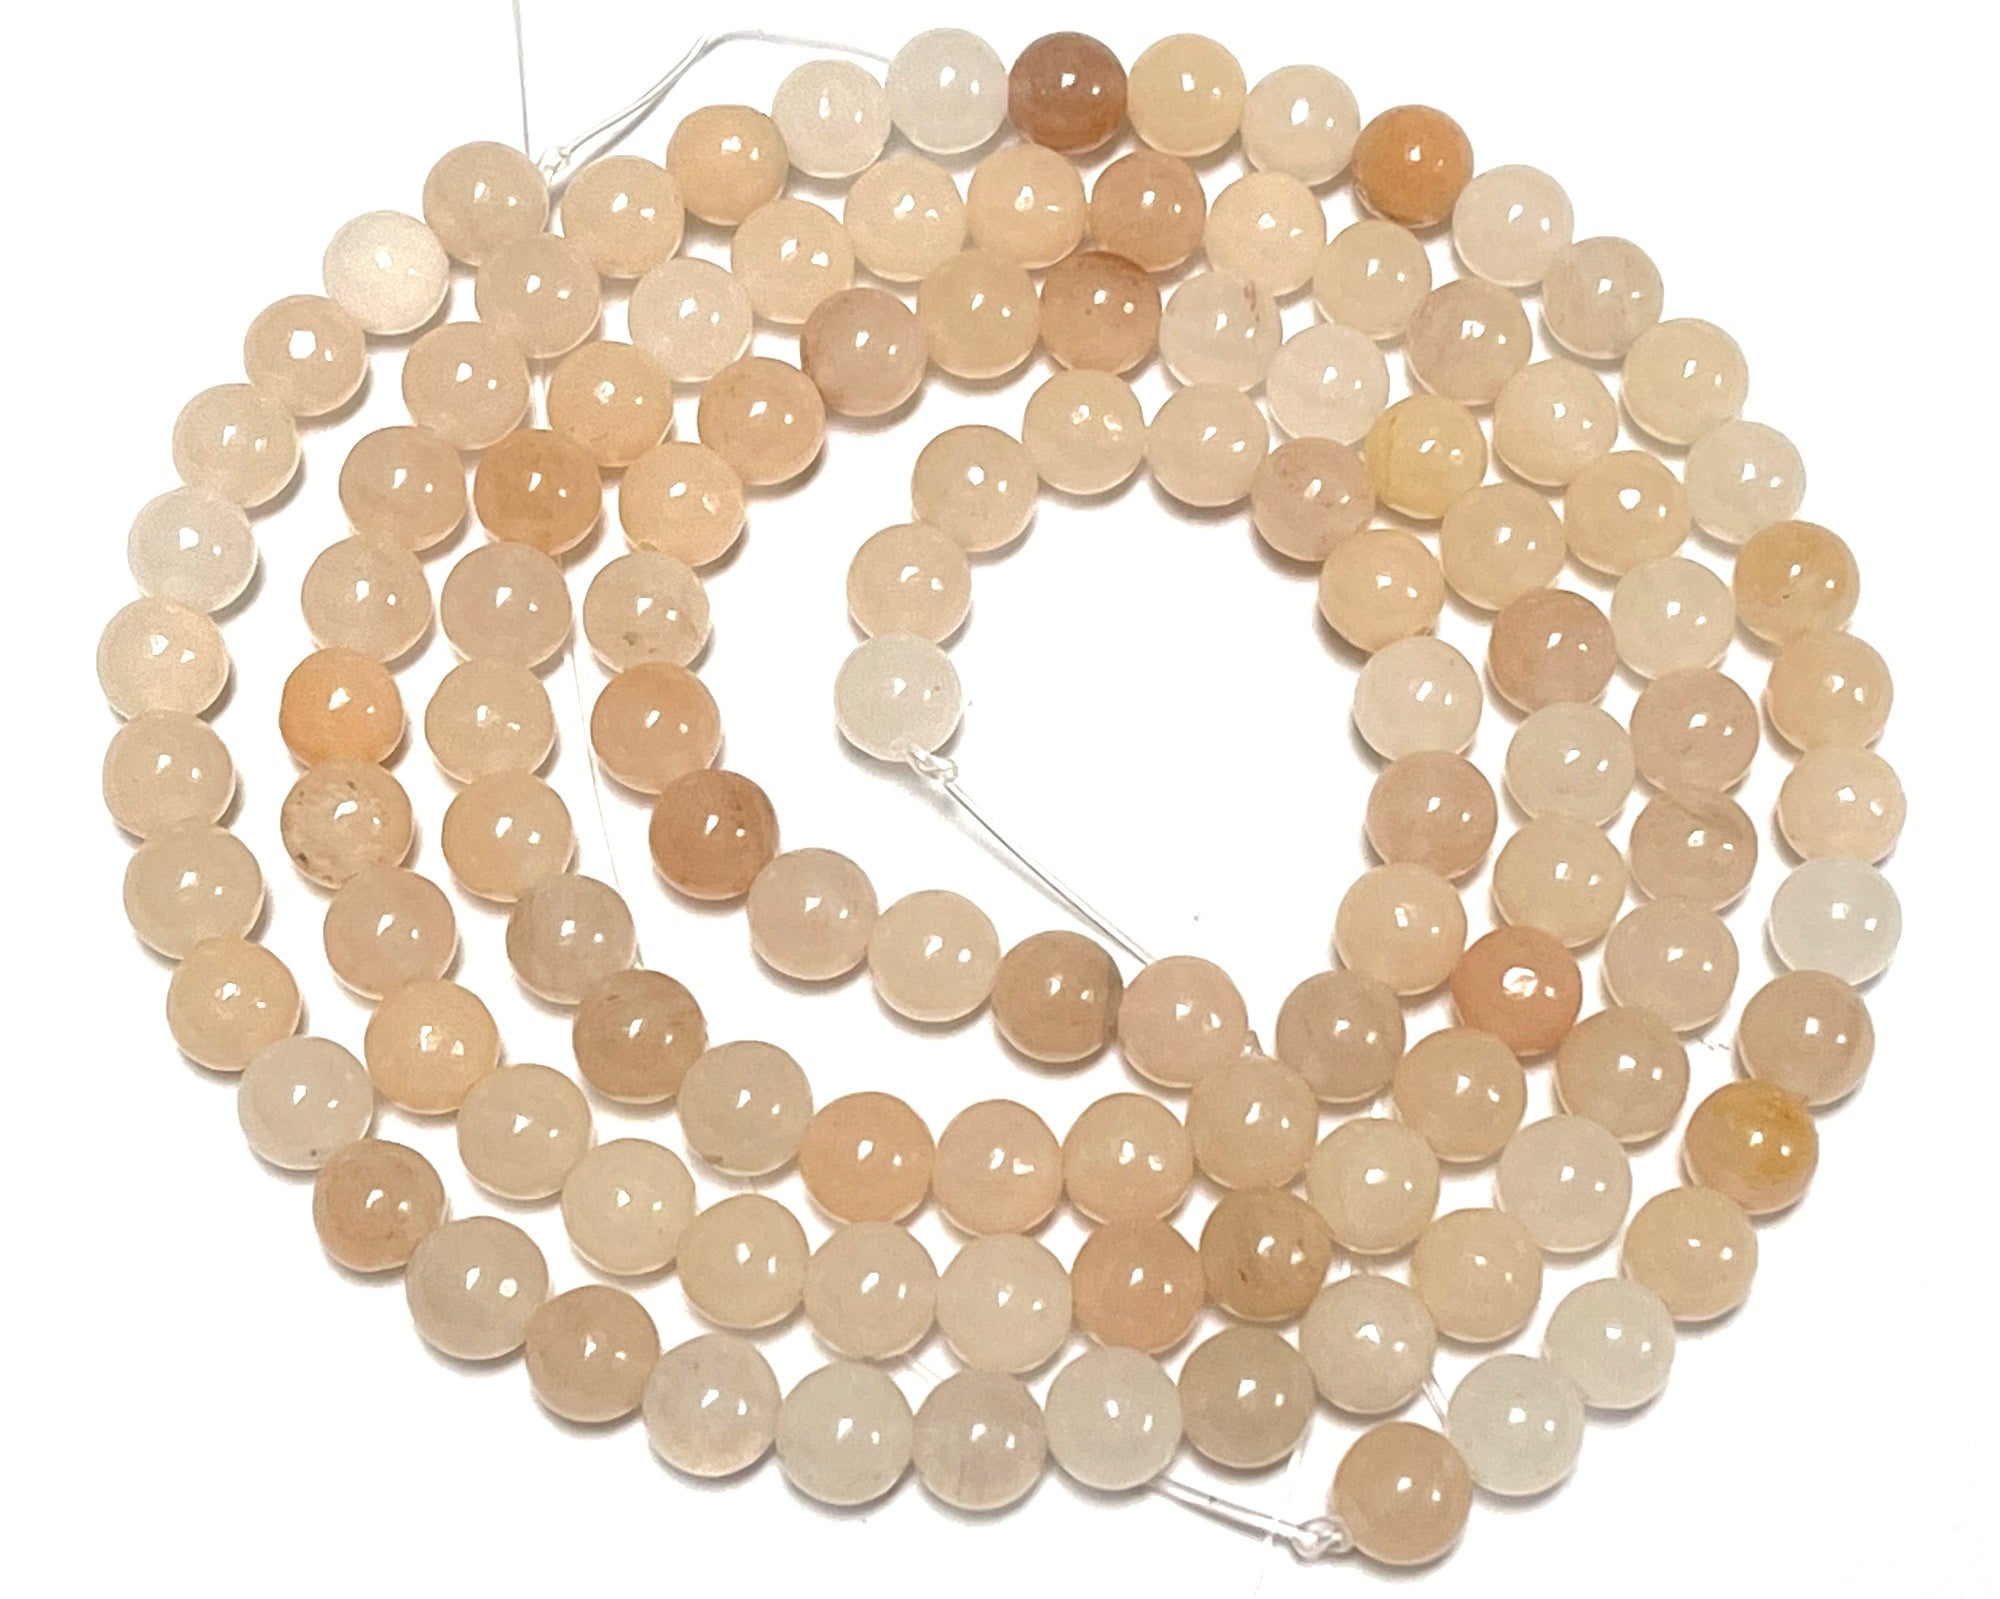 Pink Aventurine 6mm round natural gemstone beads 15" strand